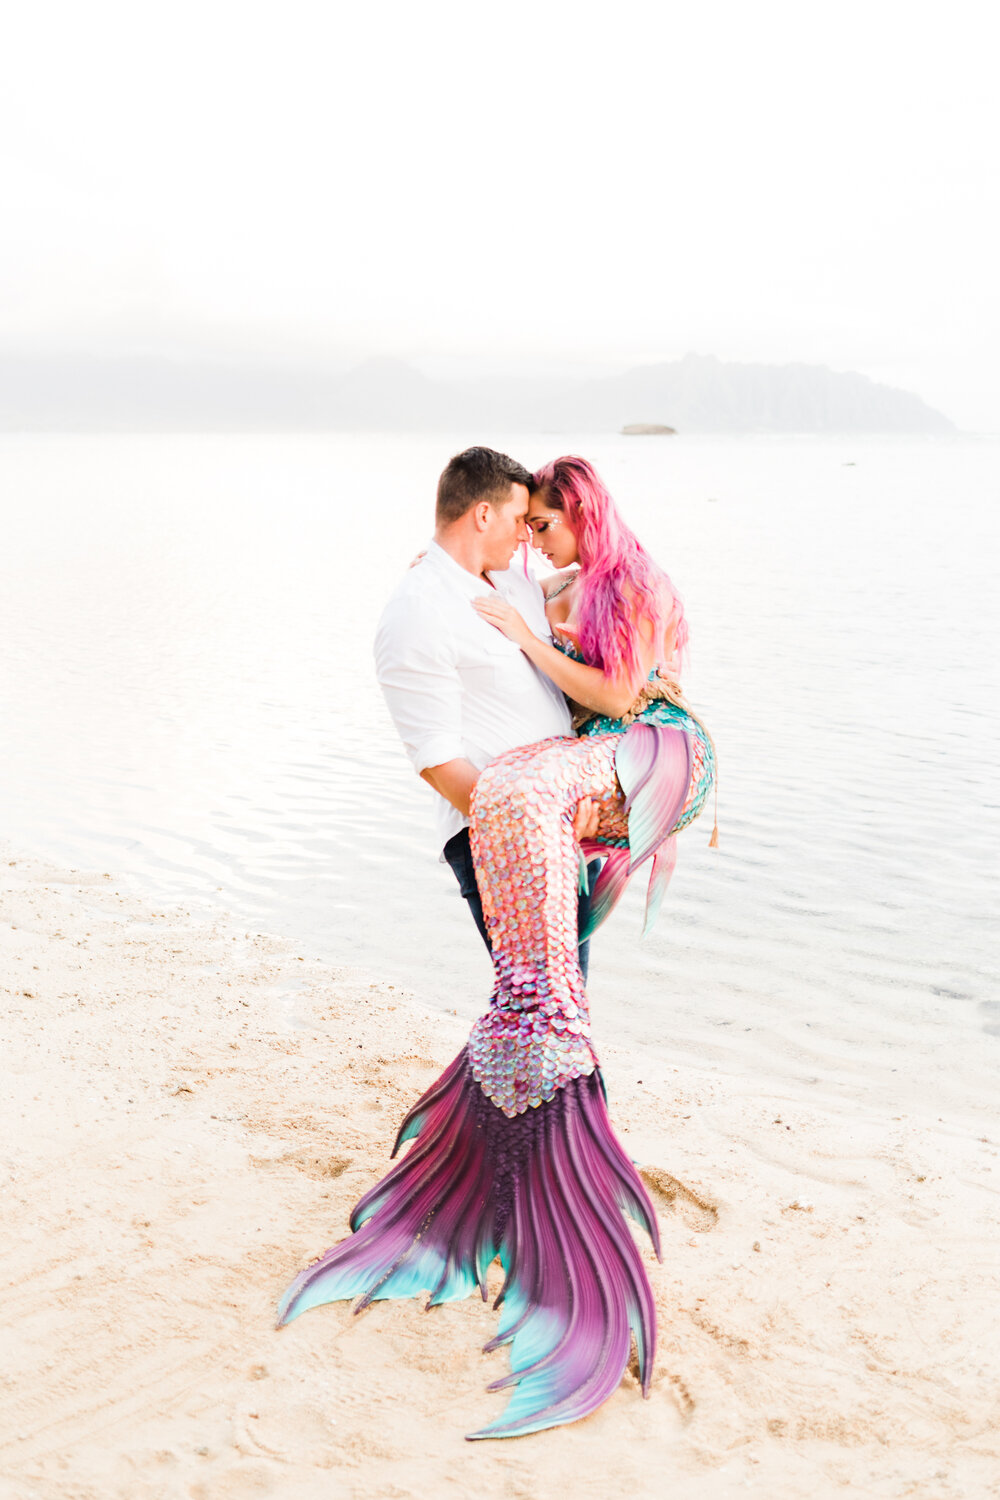 Beach_Mermaid_couple-7.jpg